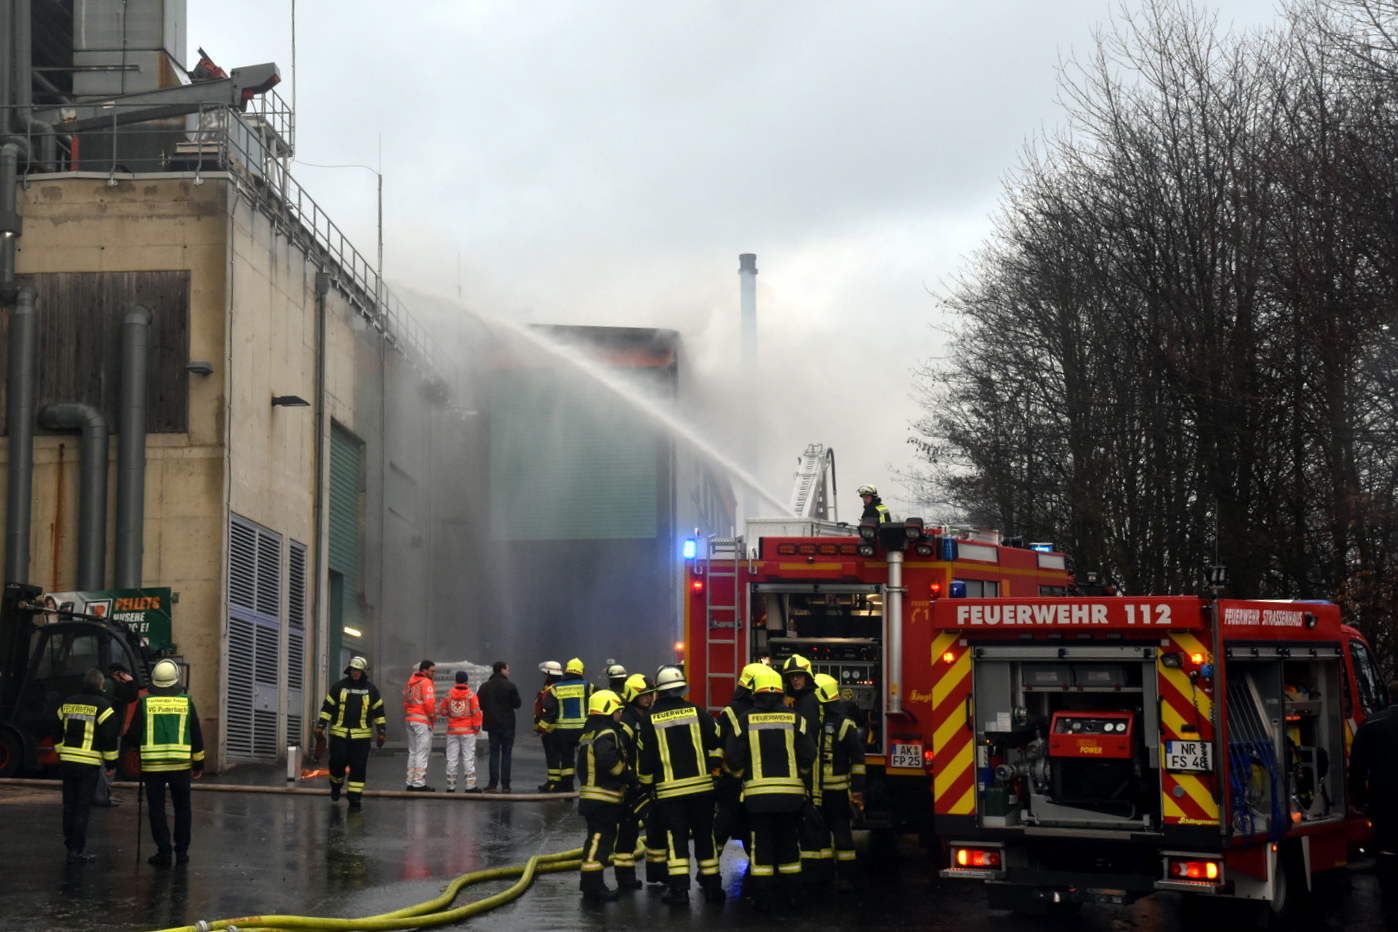 Fotos: Feuerwehr VG Puderbach
Video: RS Media